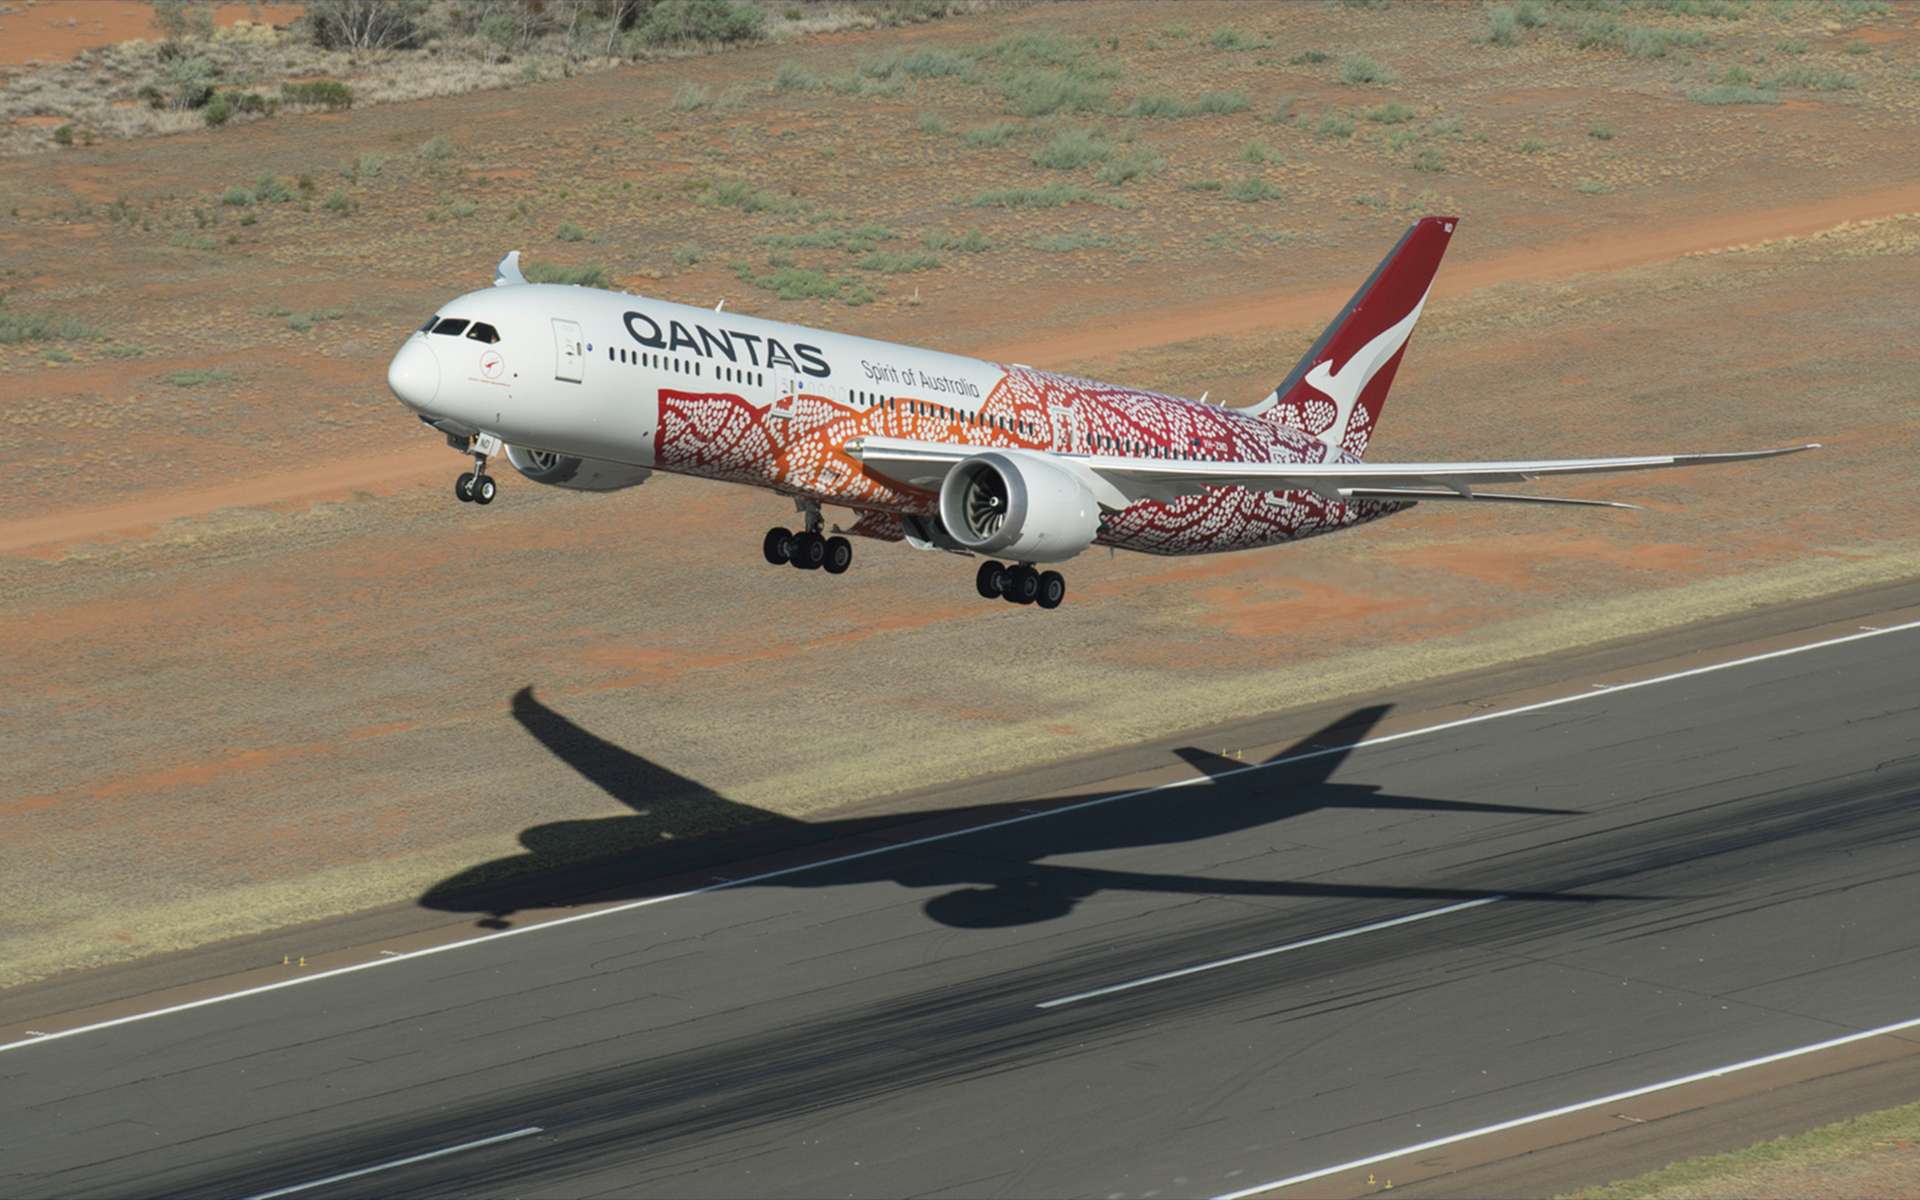 Qantas Va Tester Le Premier Vol Direct New York Sydney D Une Duree De 19 Heures